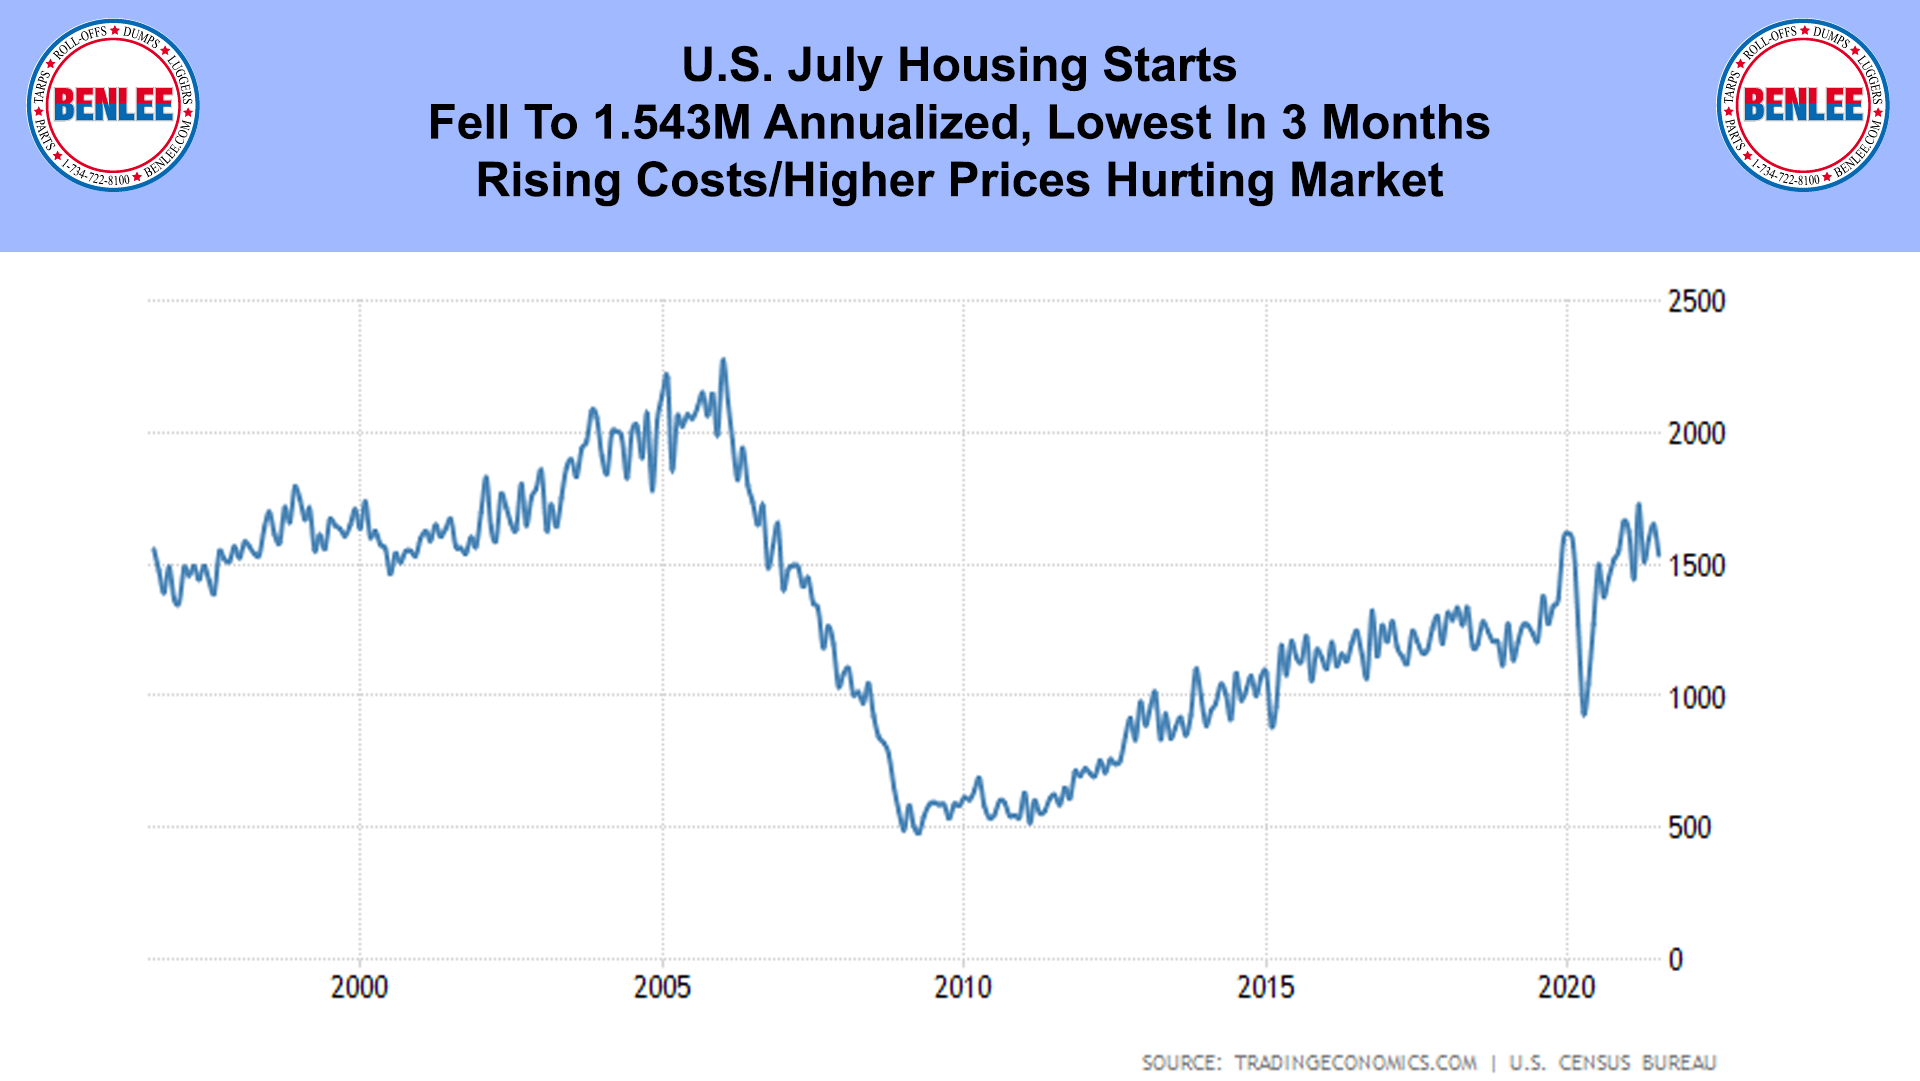 U.S. July Housing Starts